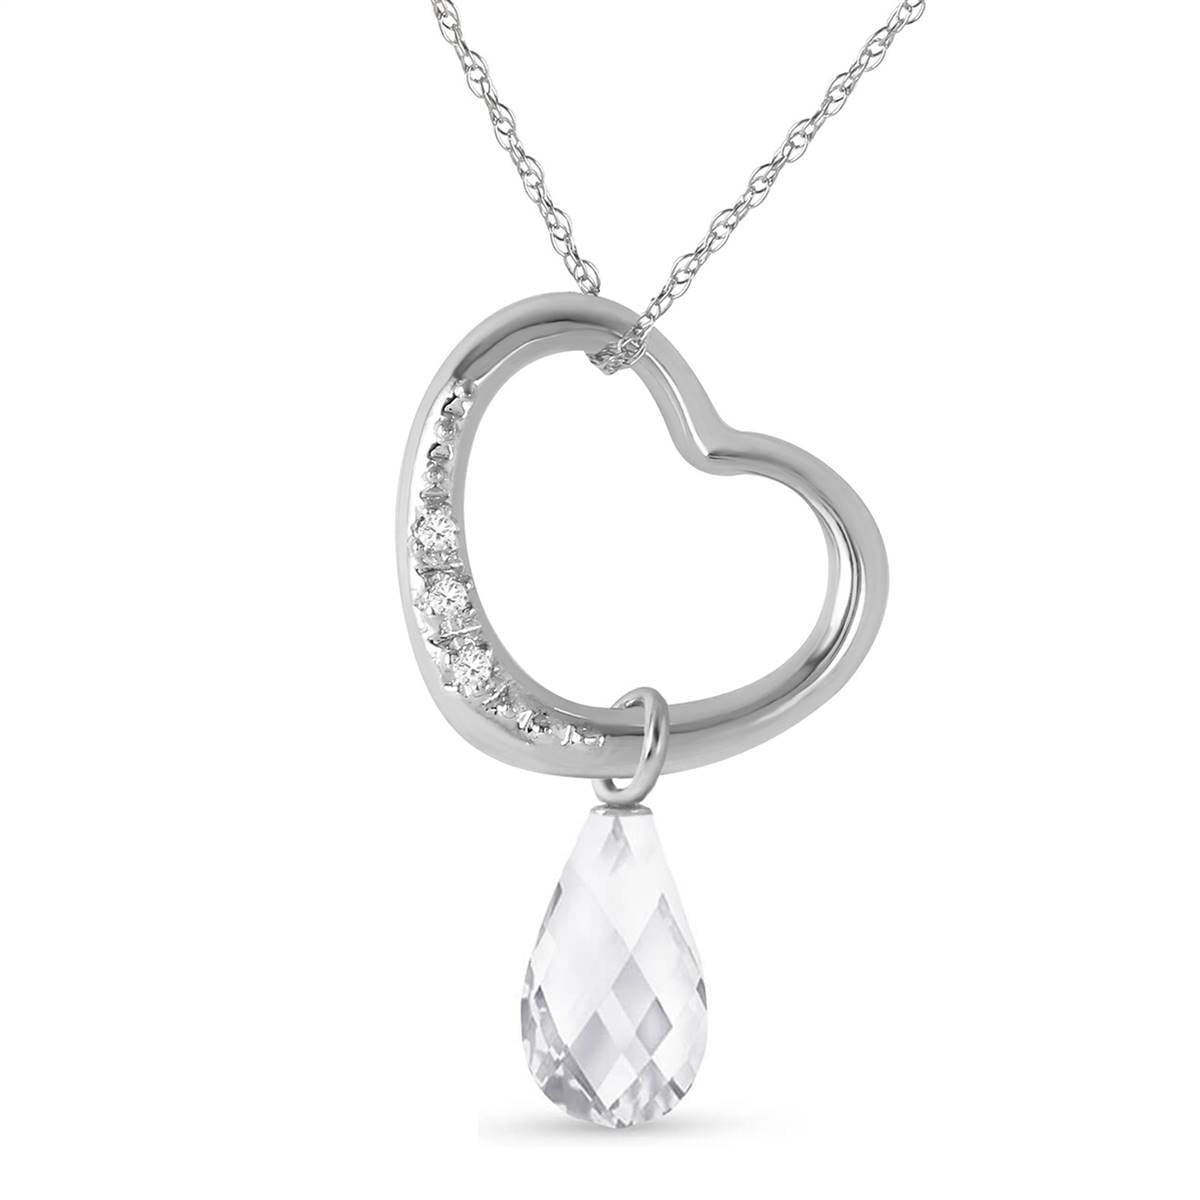 14K Solid White Gold Heart Necklace w/ Natural Diamond & White Topaz